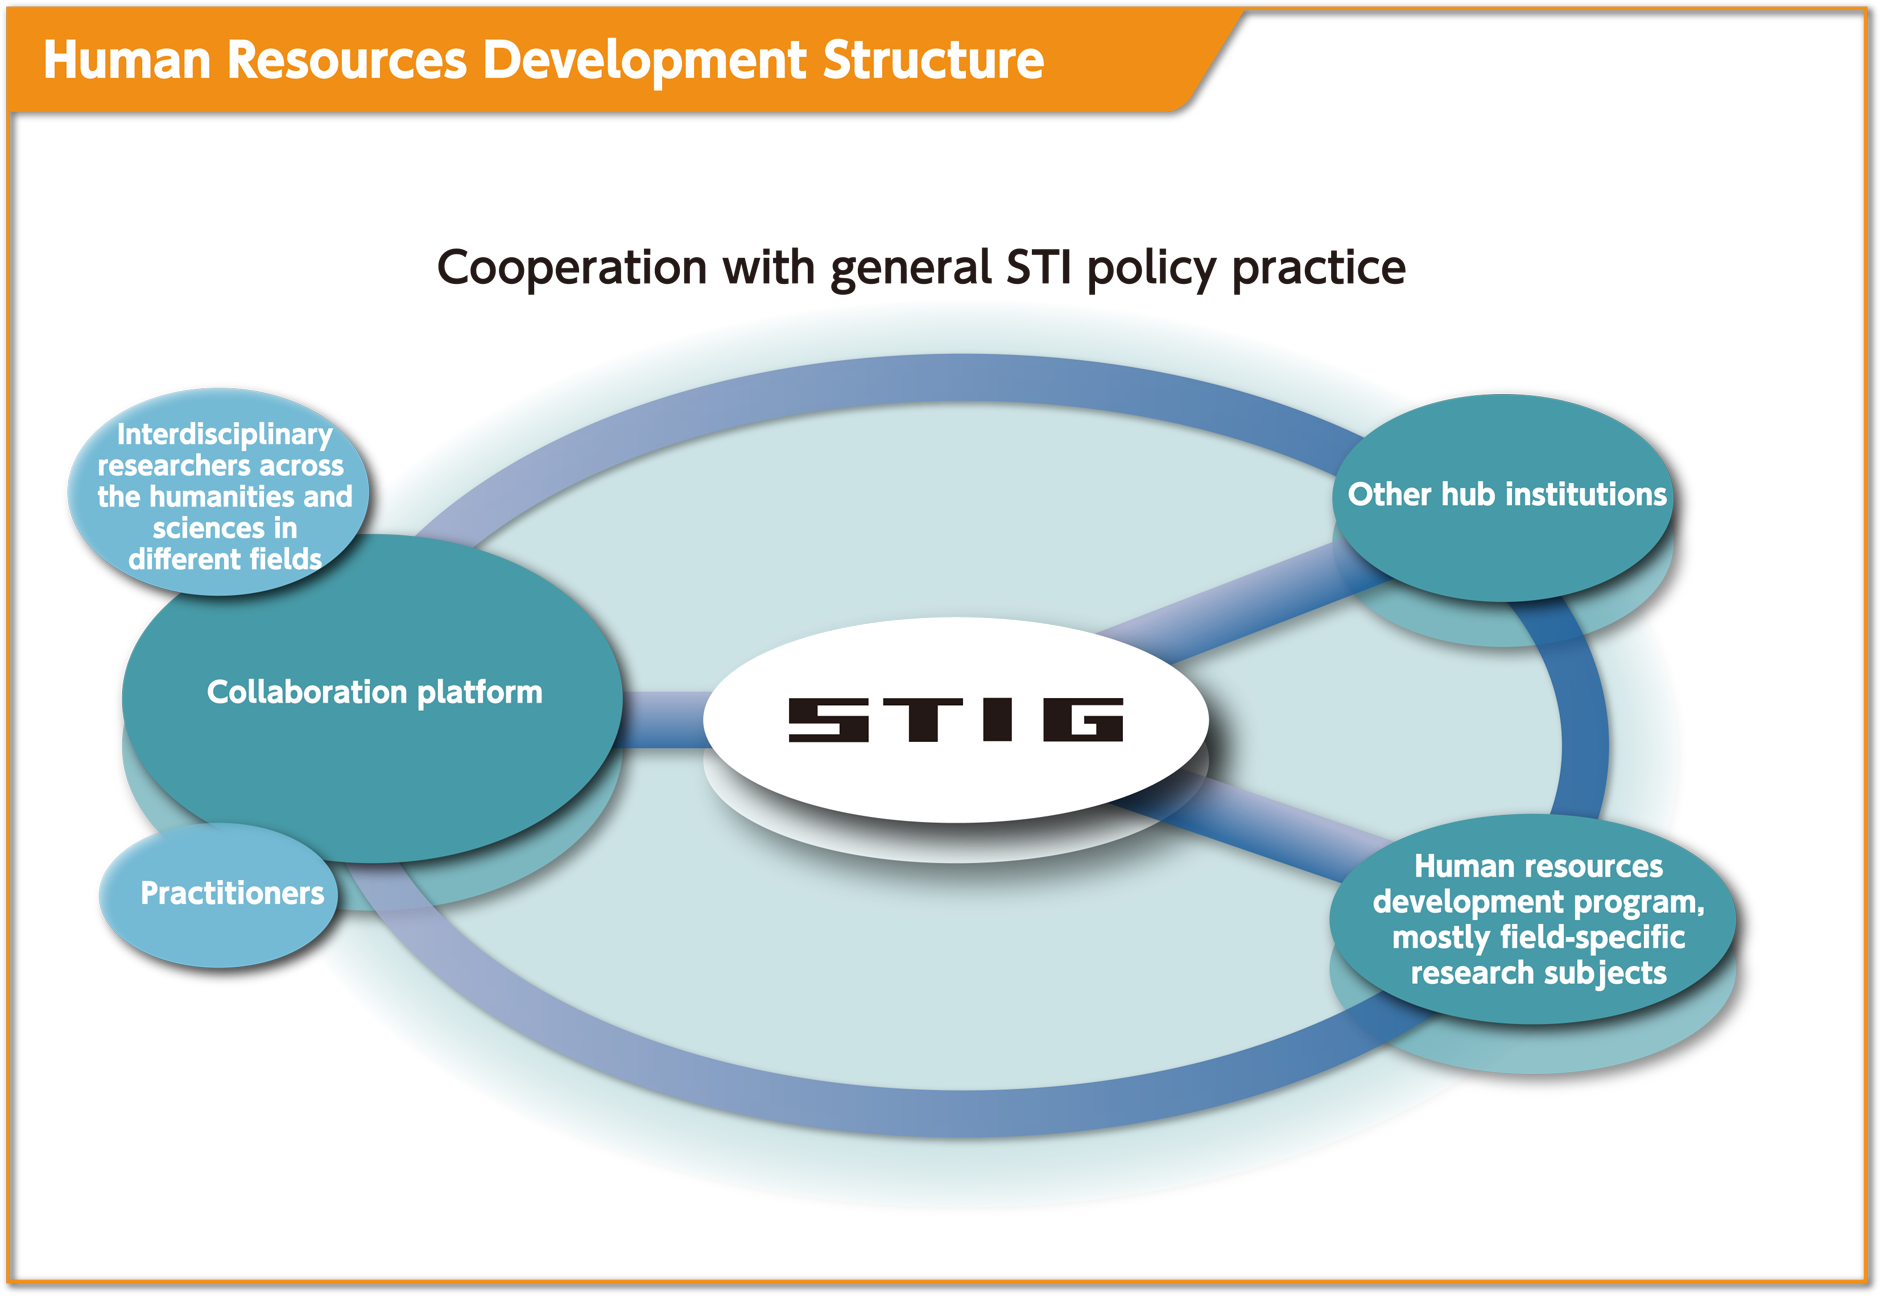 Human Resources Development Structure